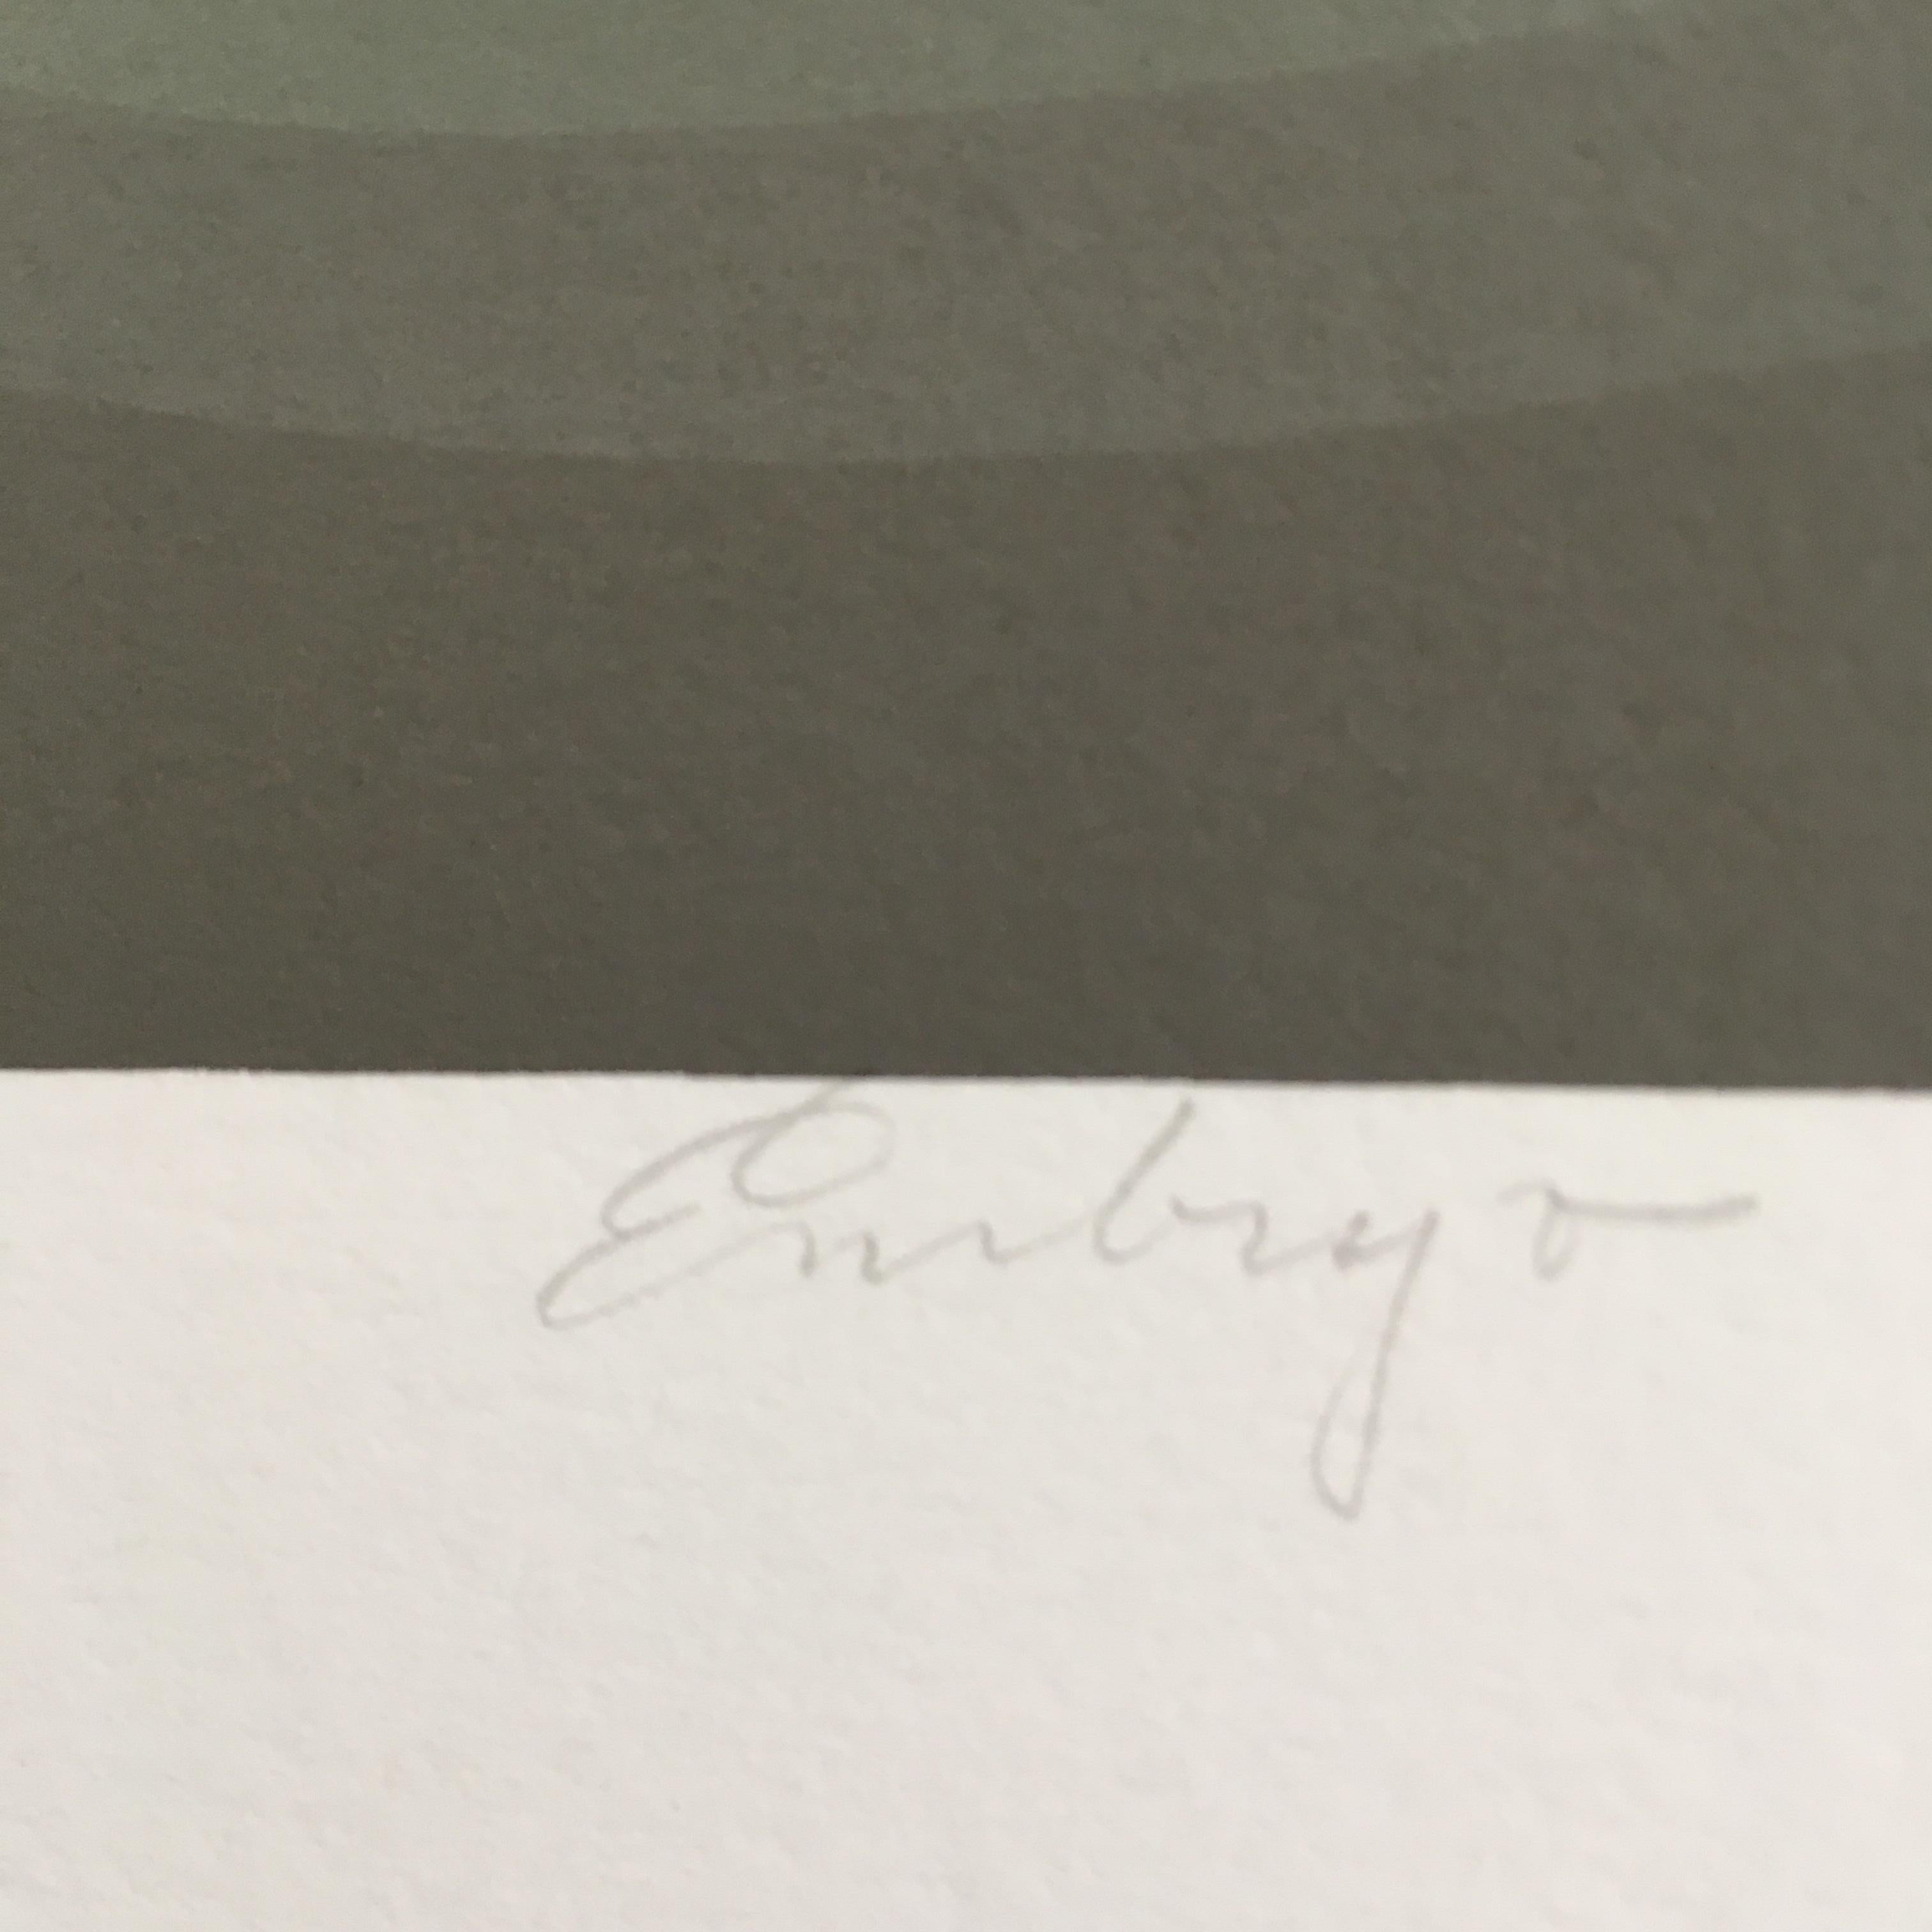 Roy Ahlgren 'Embryo' Signed Limited Edition Op-Art Serigraph Print For Sale 3